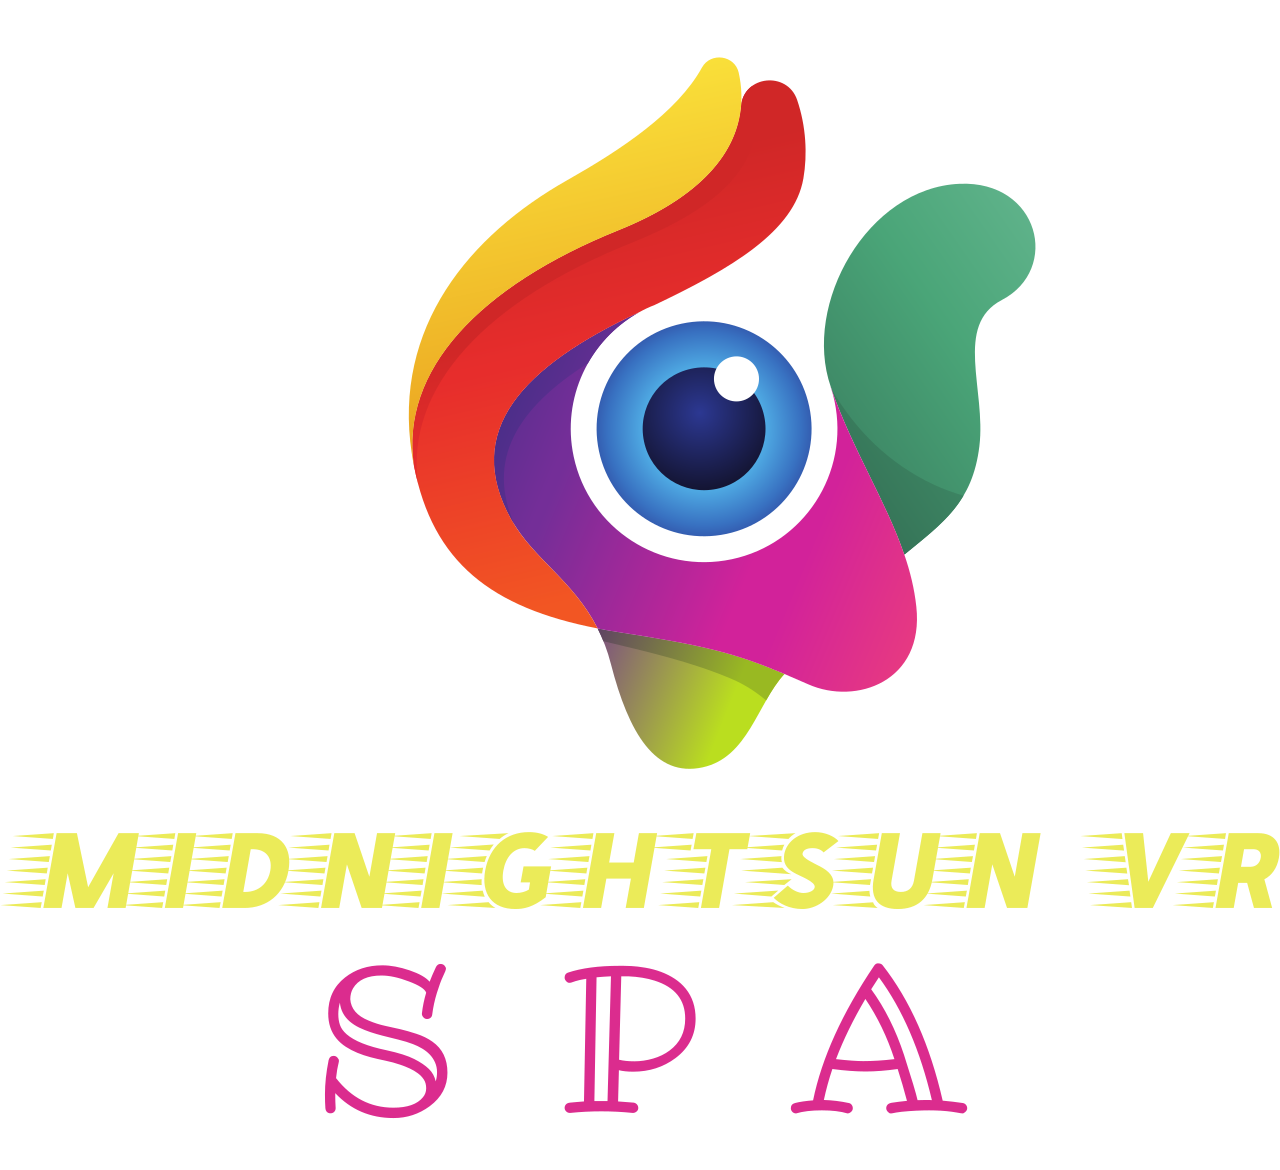 Midnightsun VR 's logo